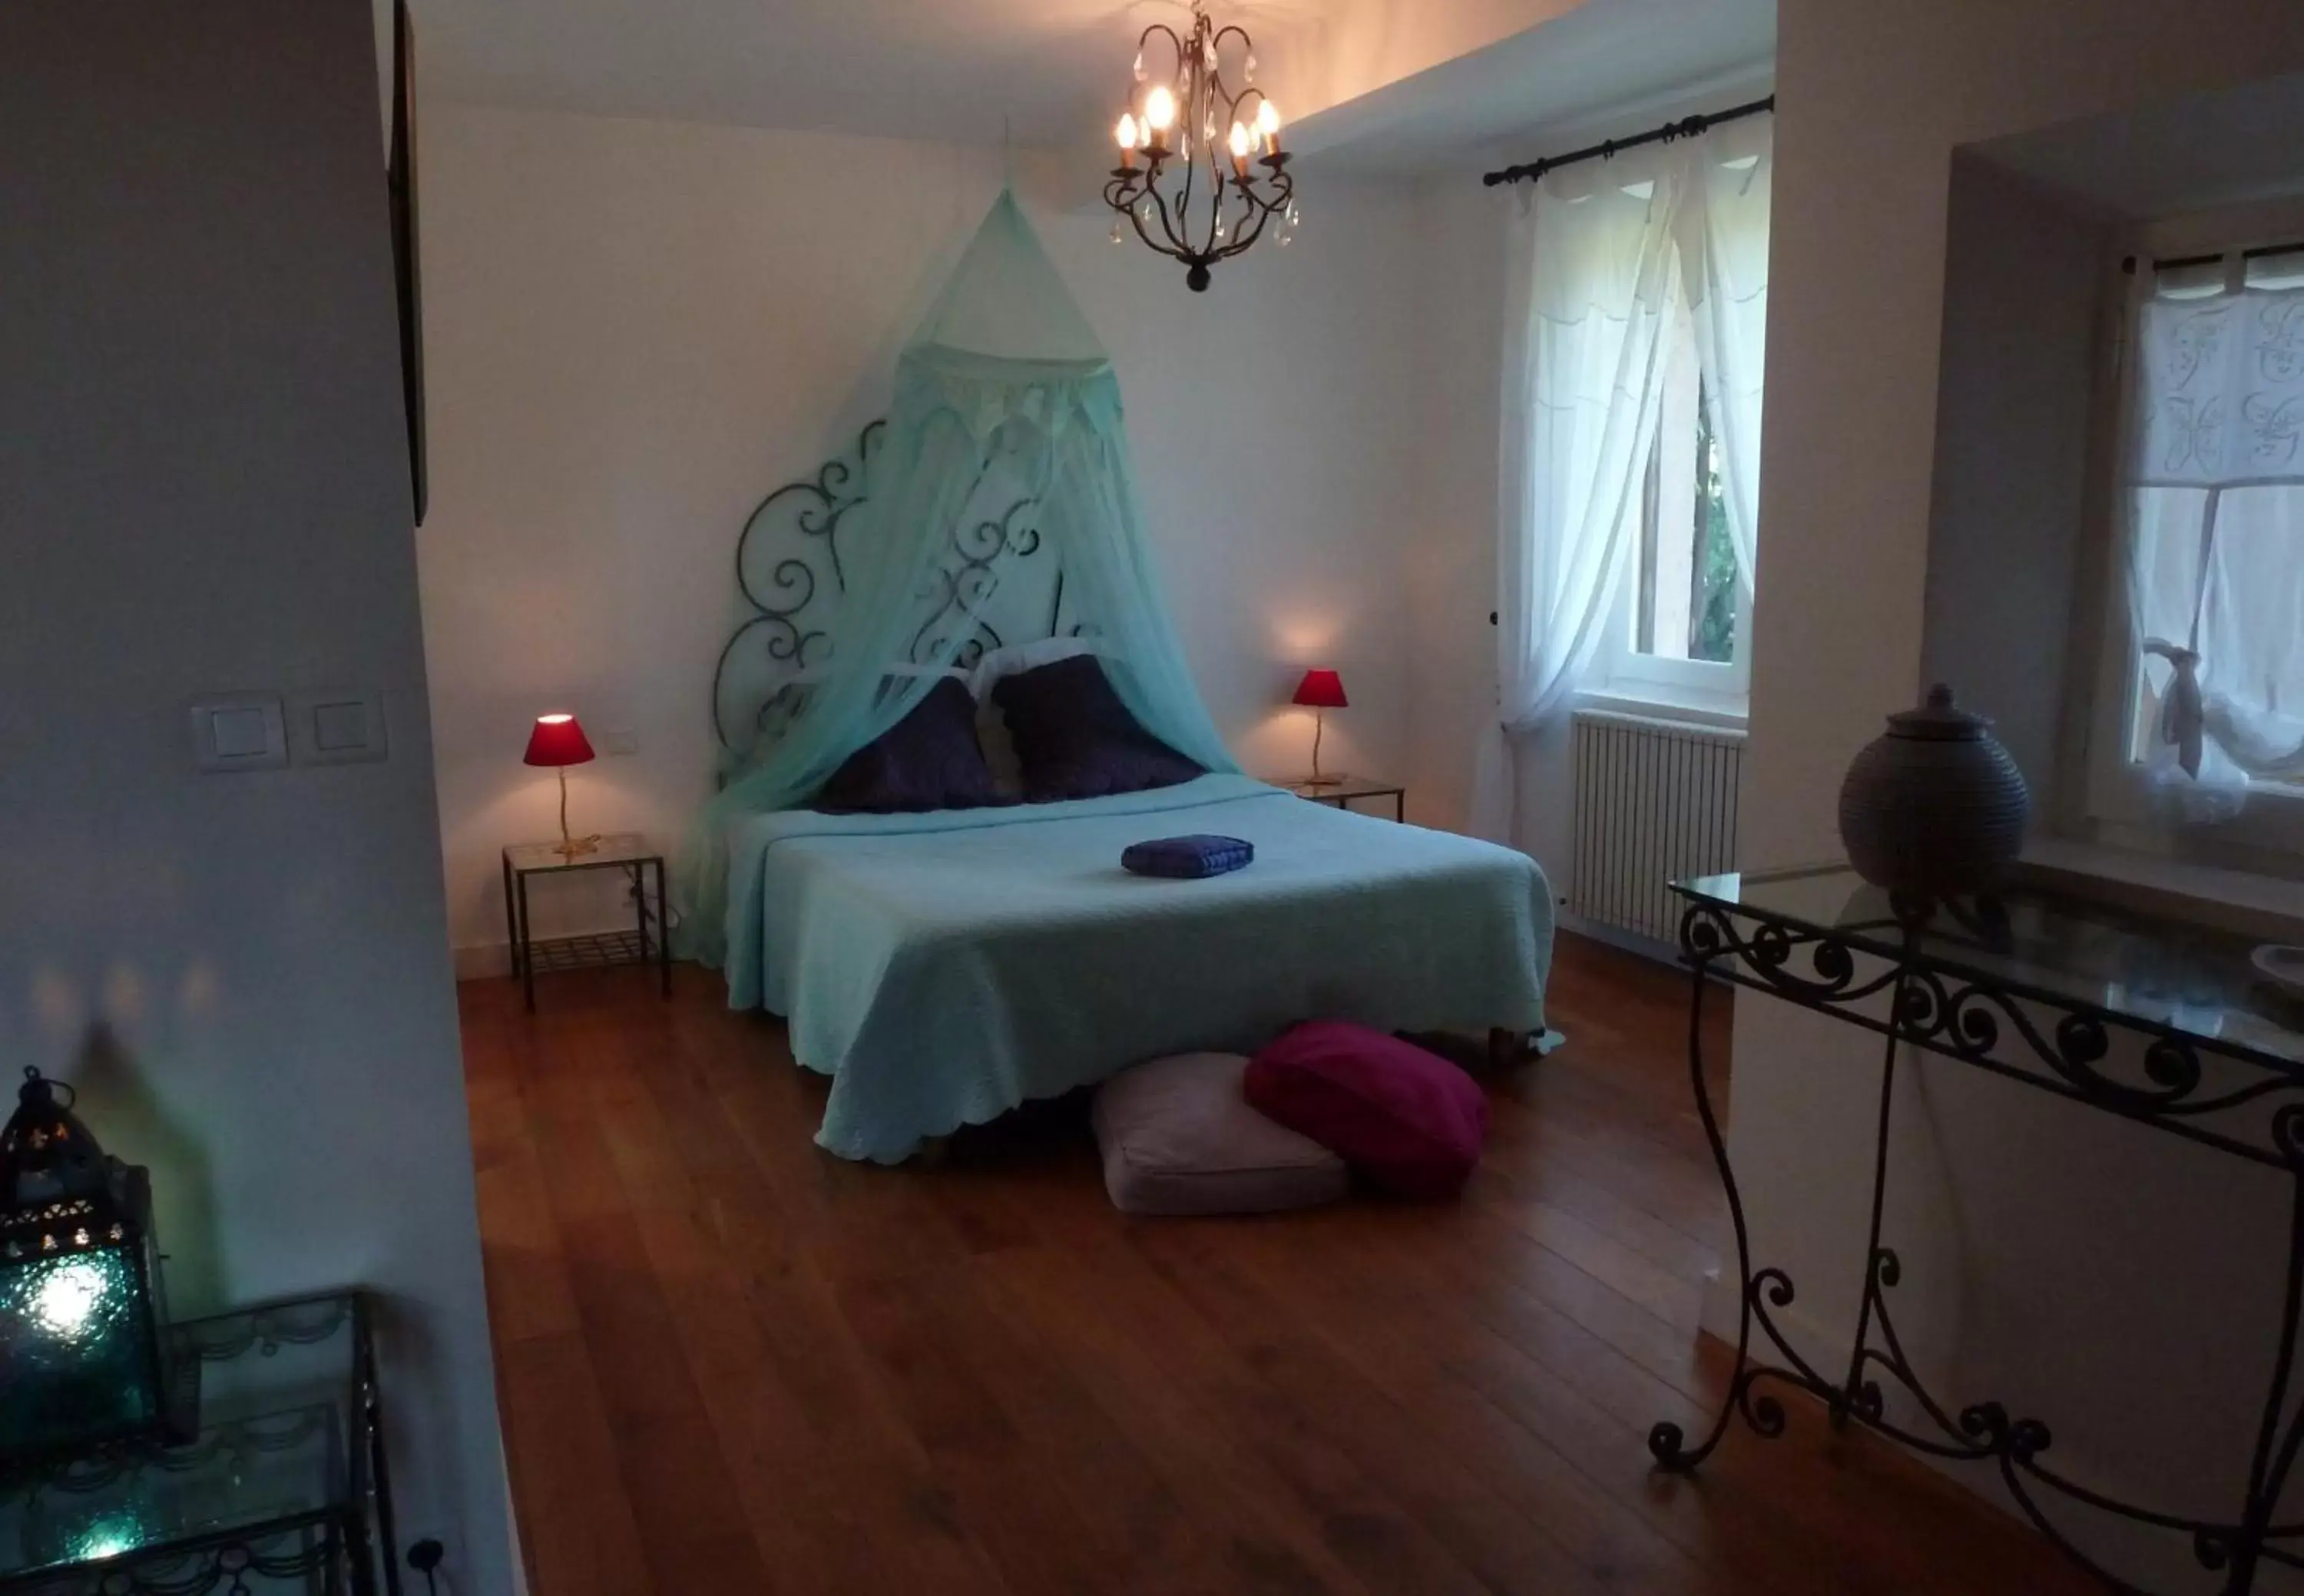 Bed, Room Photo in VILLA MERCEDES B&b